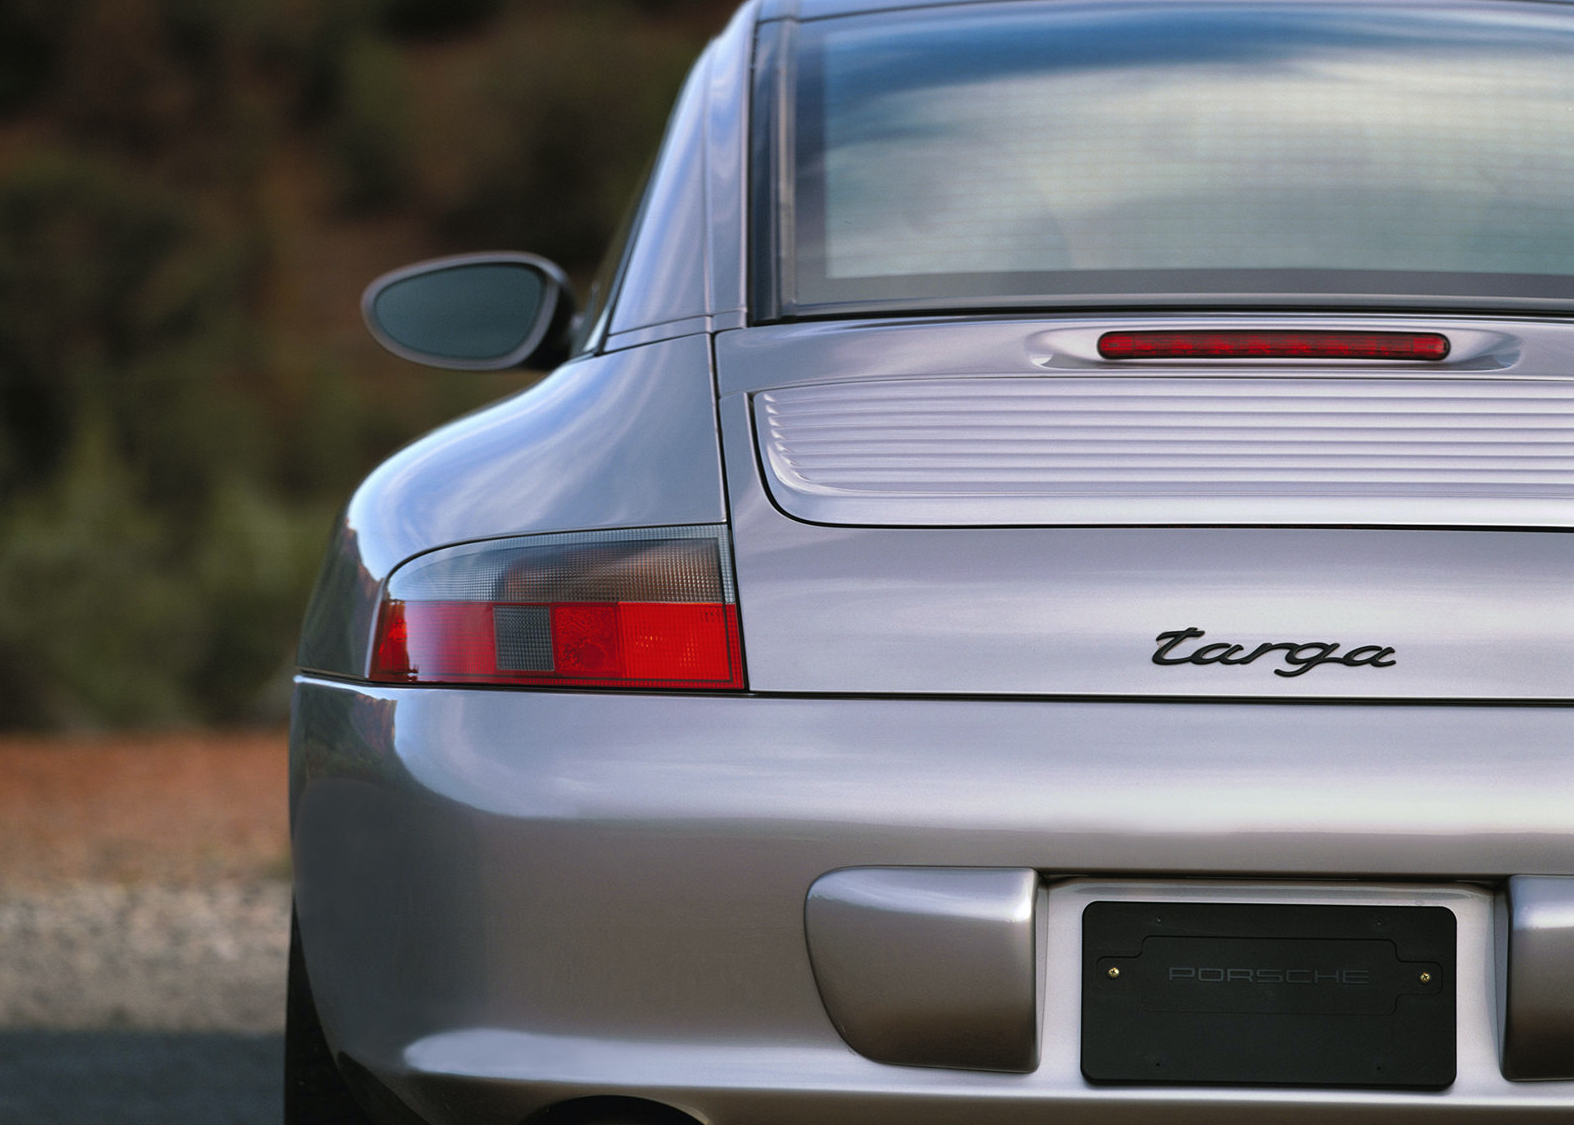 Porsche 911 Targa (996) (2003) – Specifications